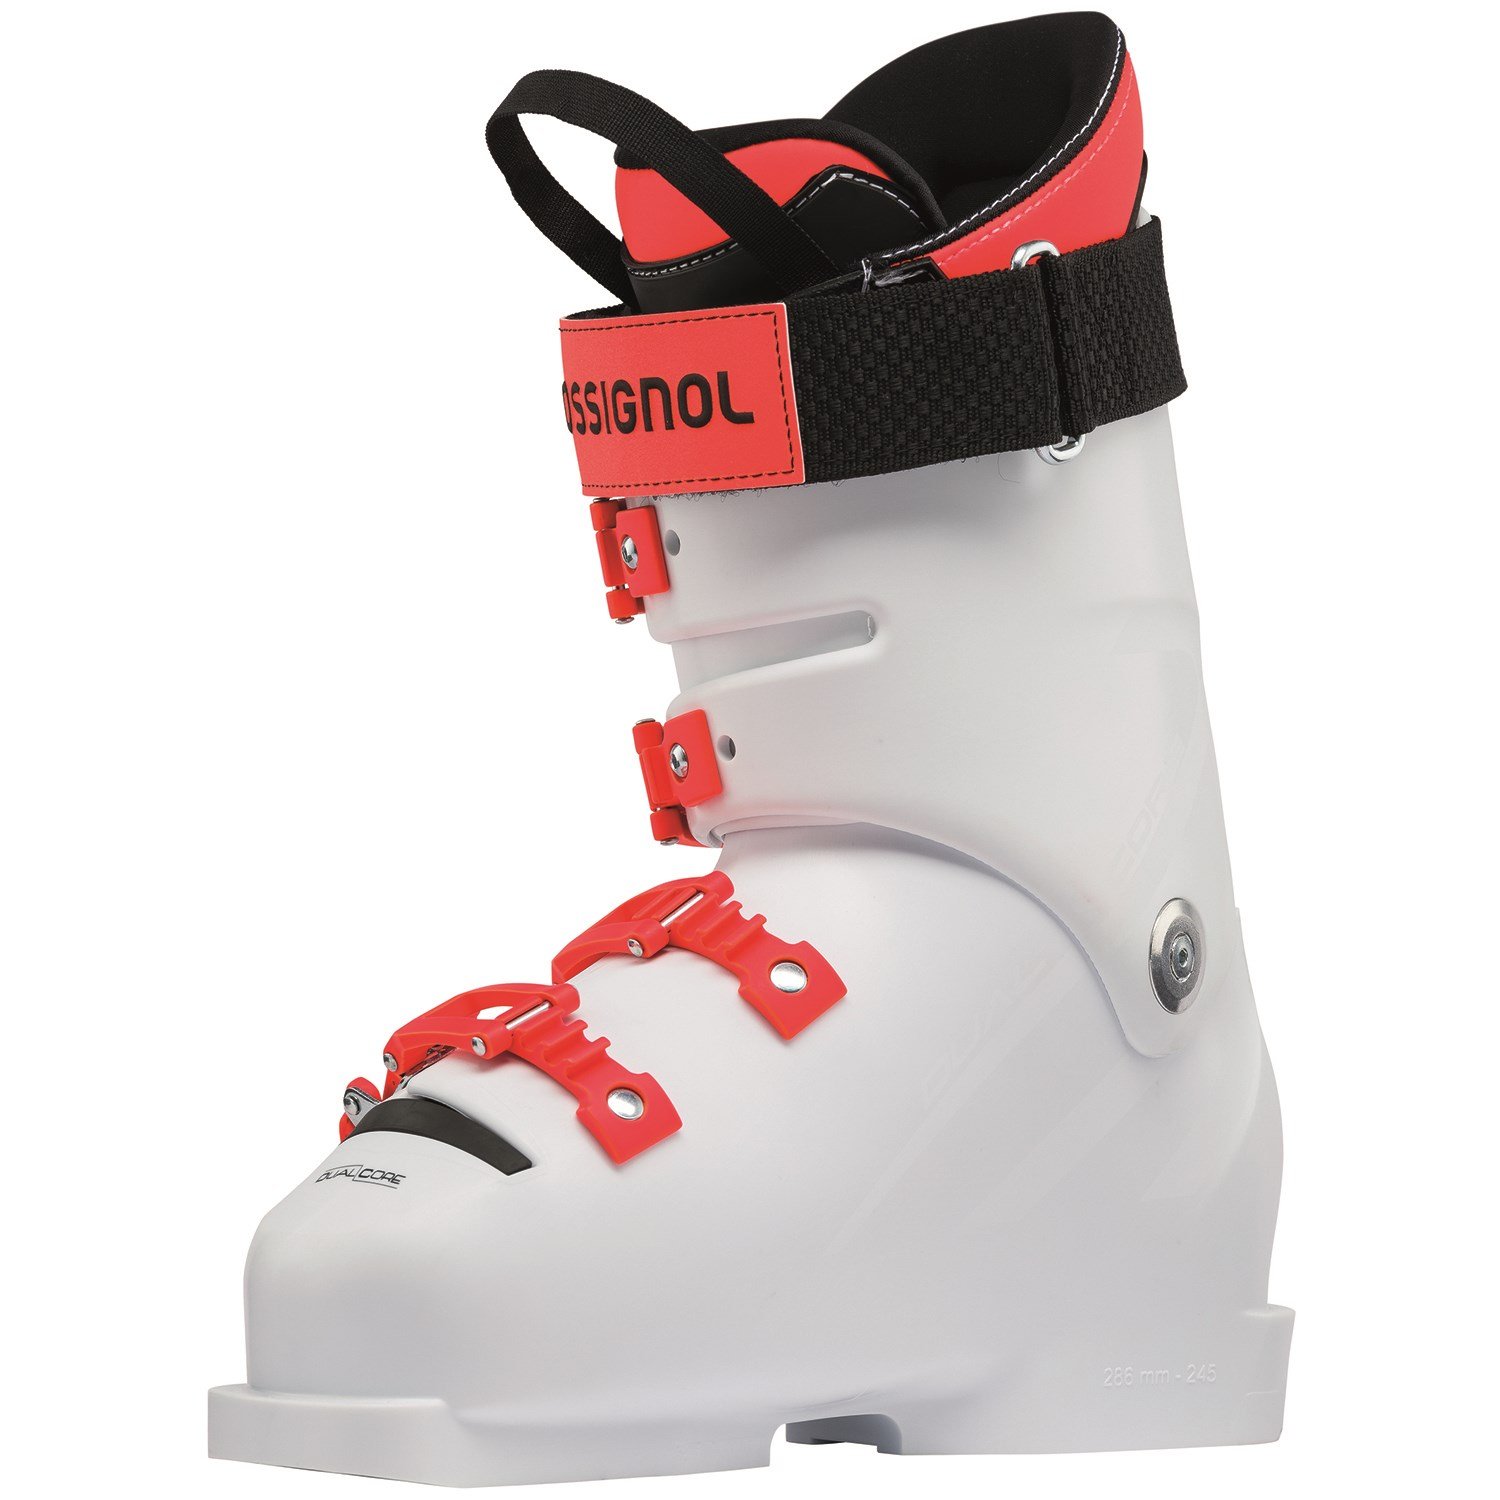 2020 Rossignol Hero WC 110 SC WMN/JR Ski Boots